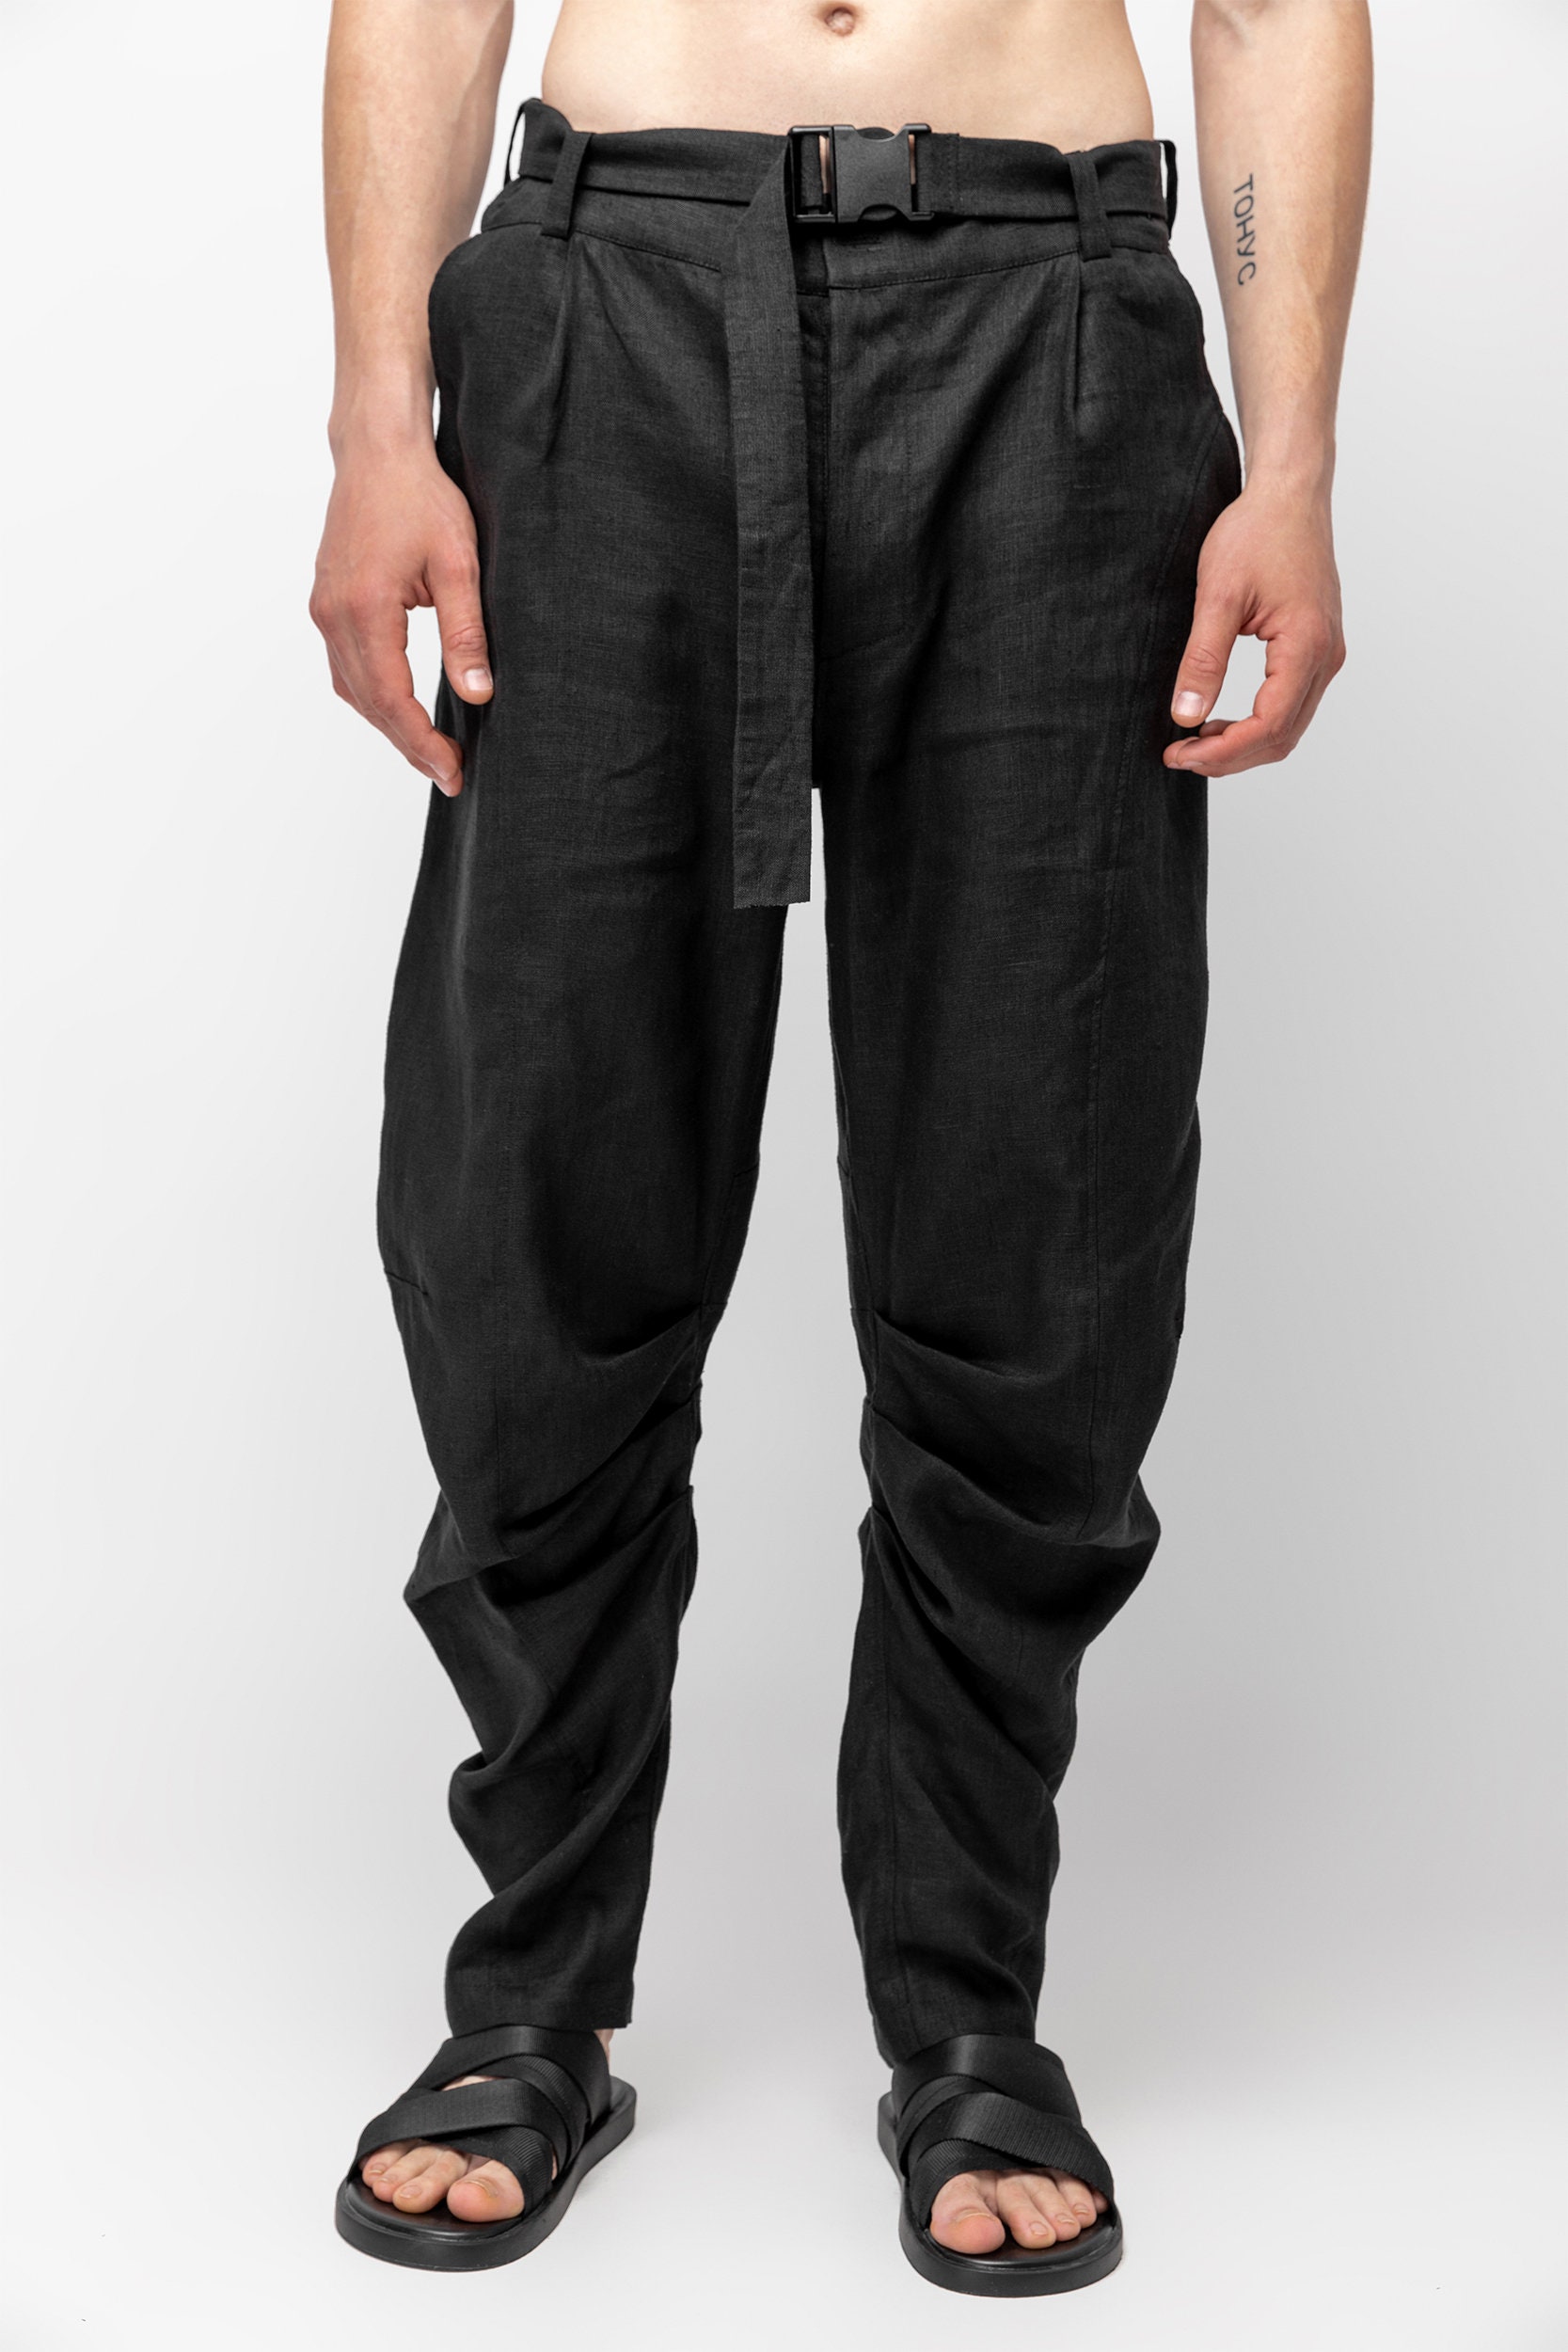 Men linen pants black harem trousers gothic cyberpunk loose | Etsy